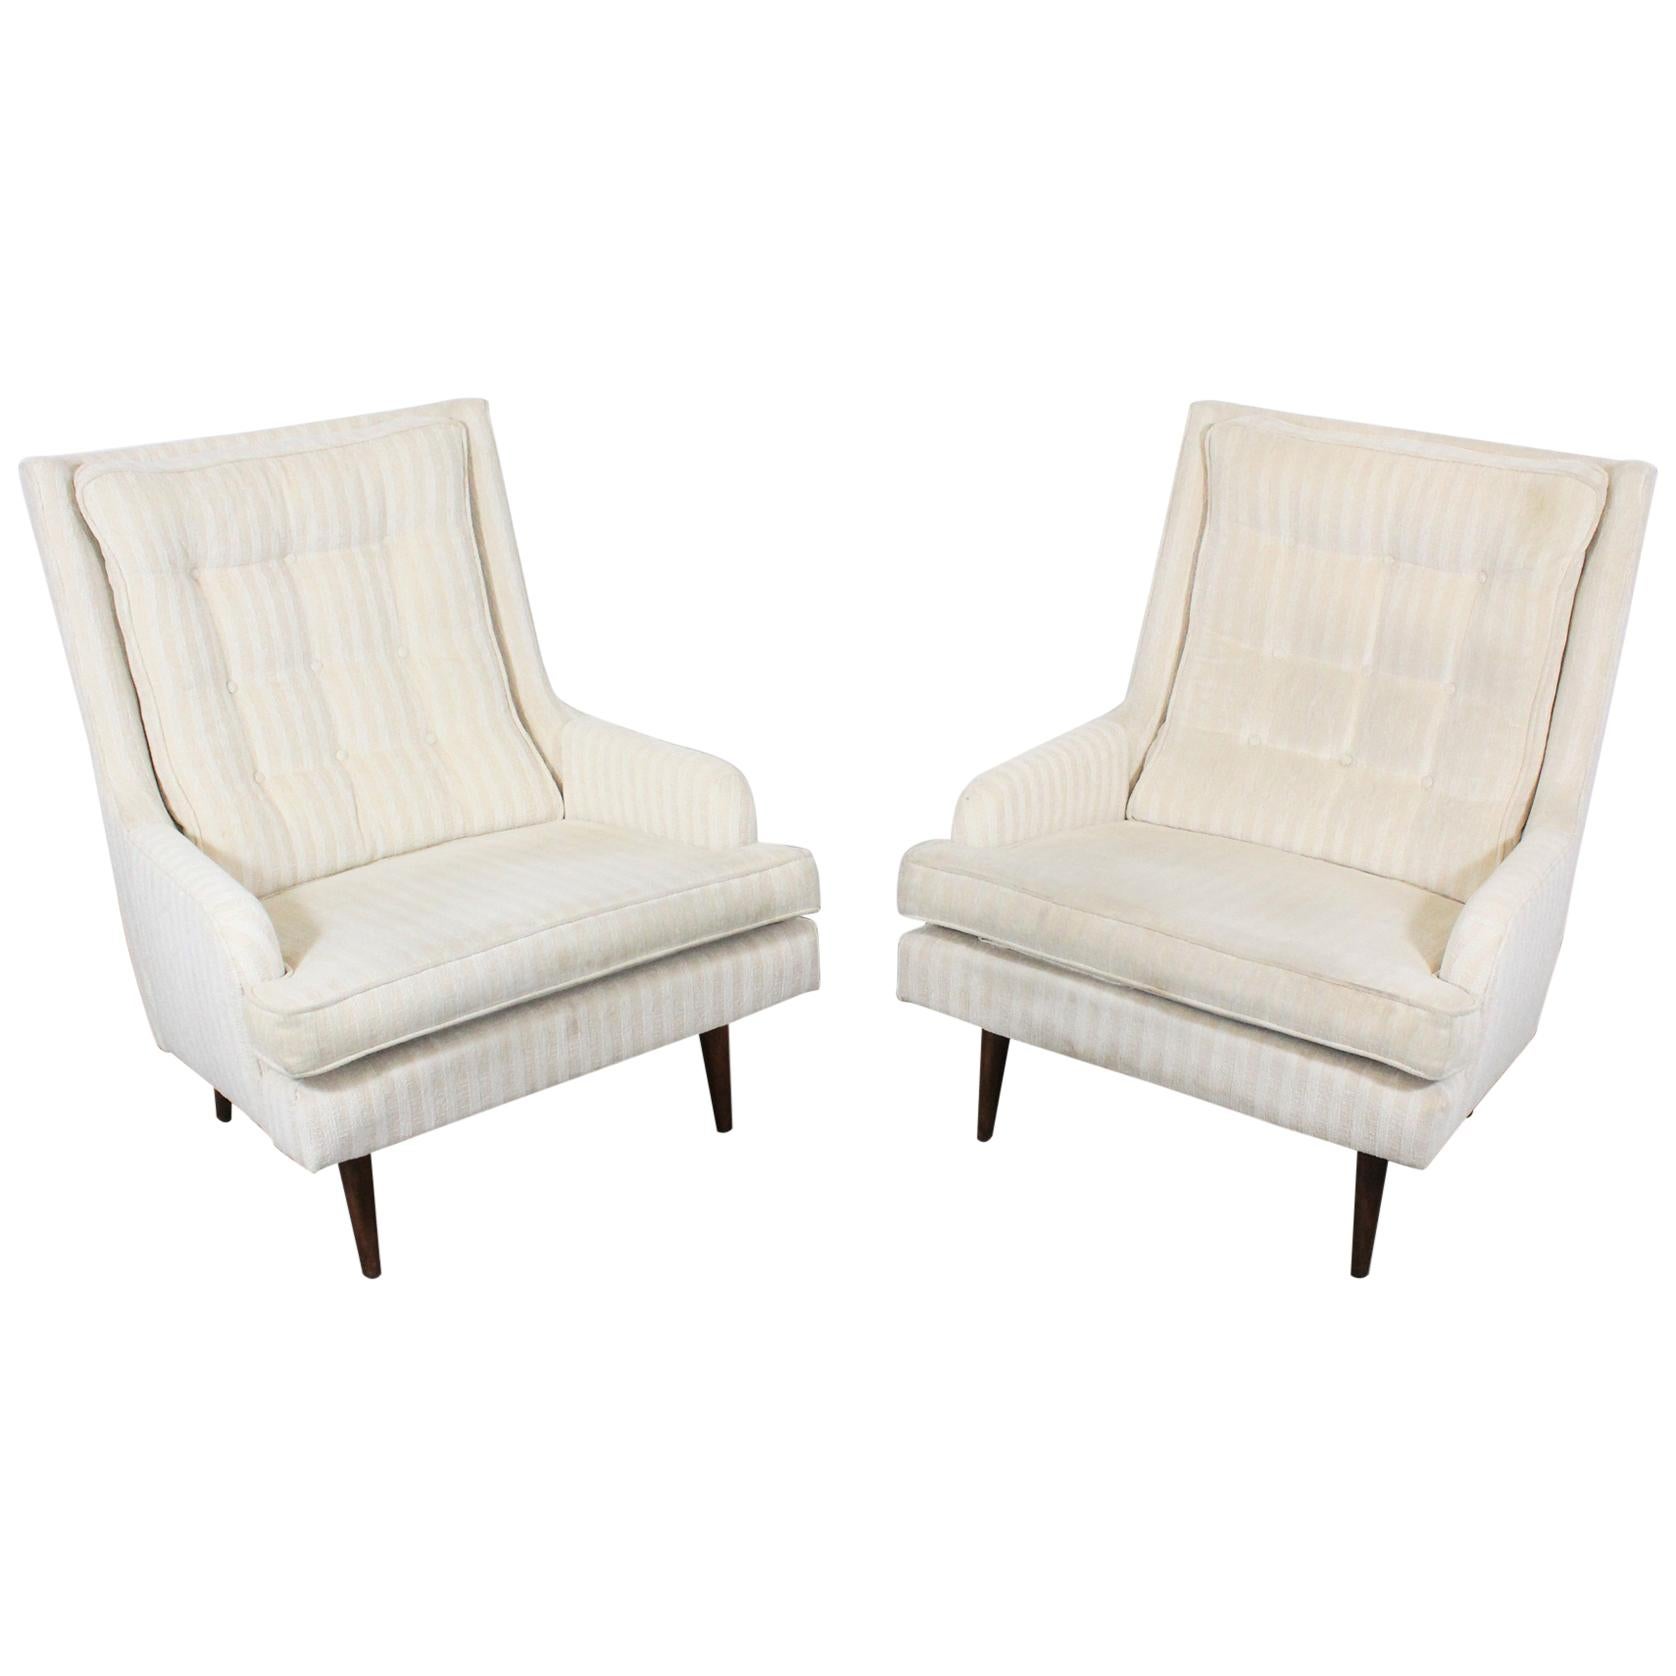 Pair of Midcentury Danish Modern Paul McCobb Style Lounge Chairs